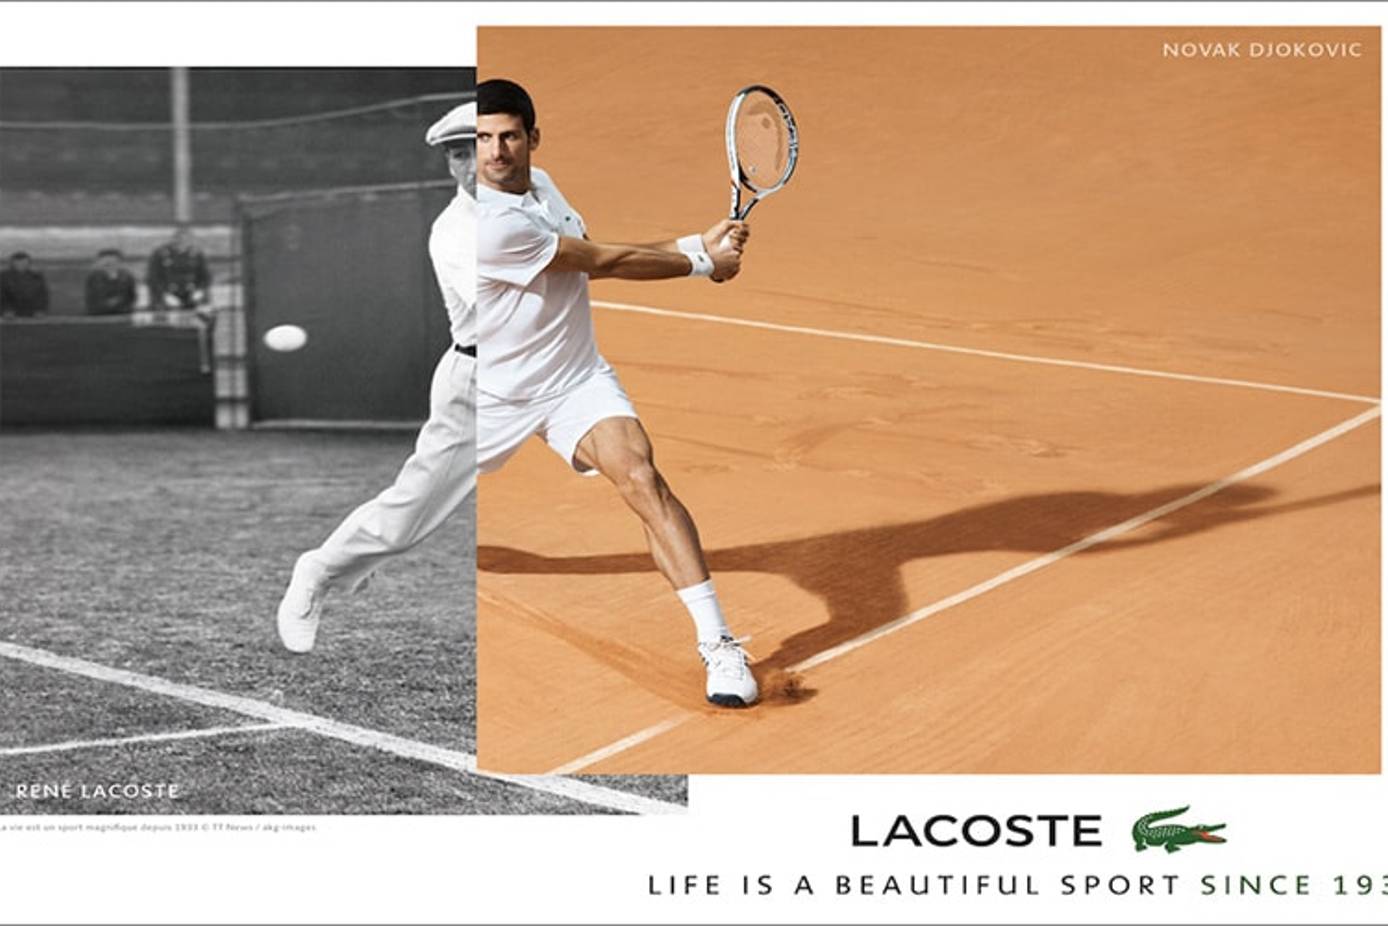 Djokovic joins Lacoste's athletes